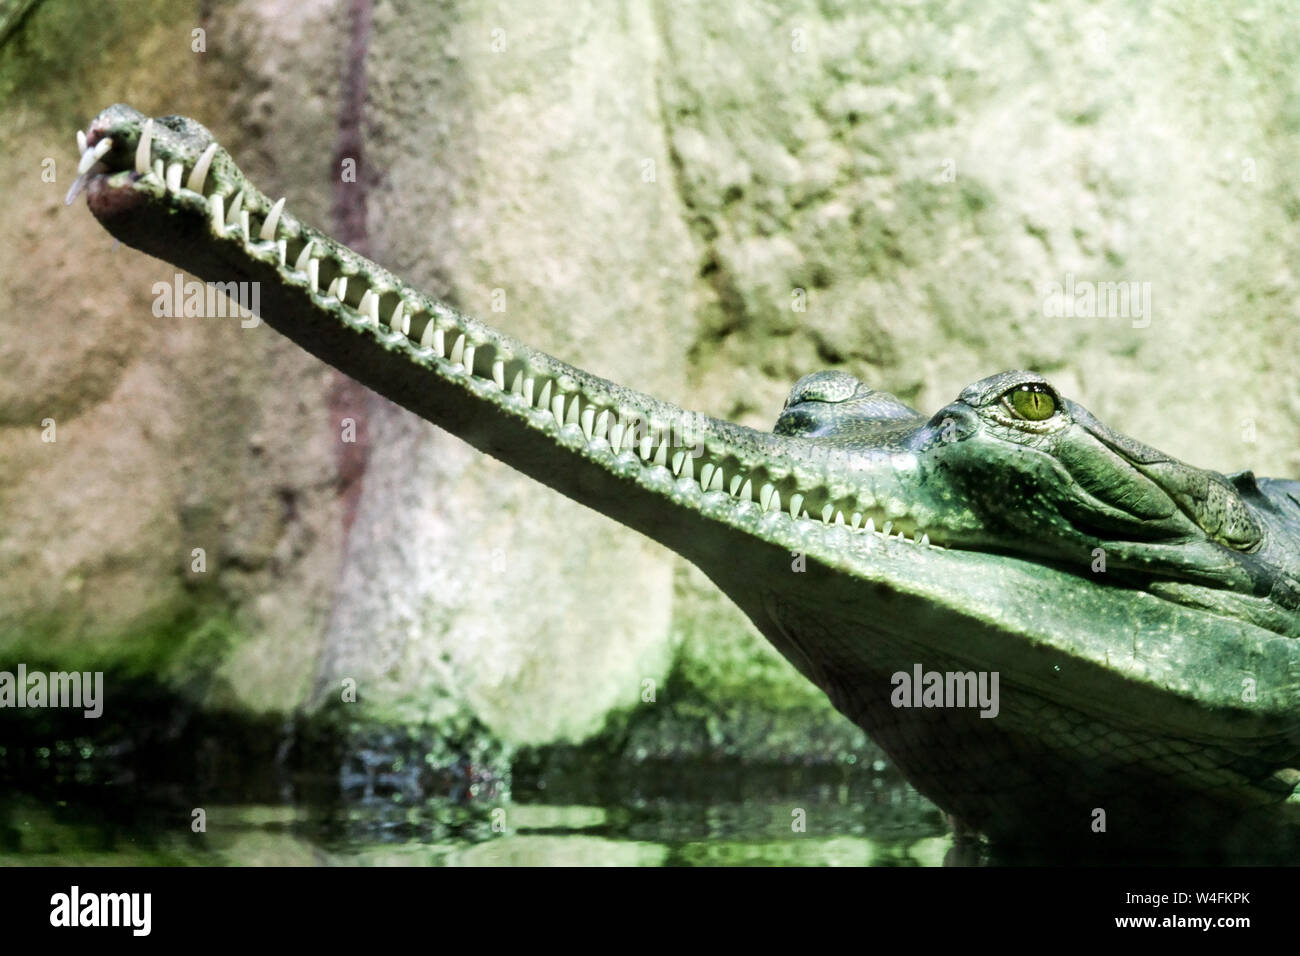 The Gharial, eating-fish crocodile, Gavialis gangeticus Stock Photo